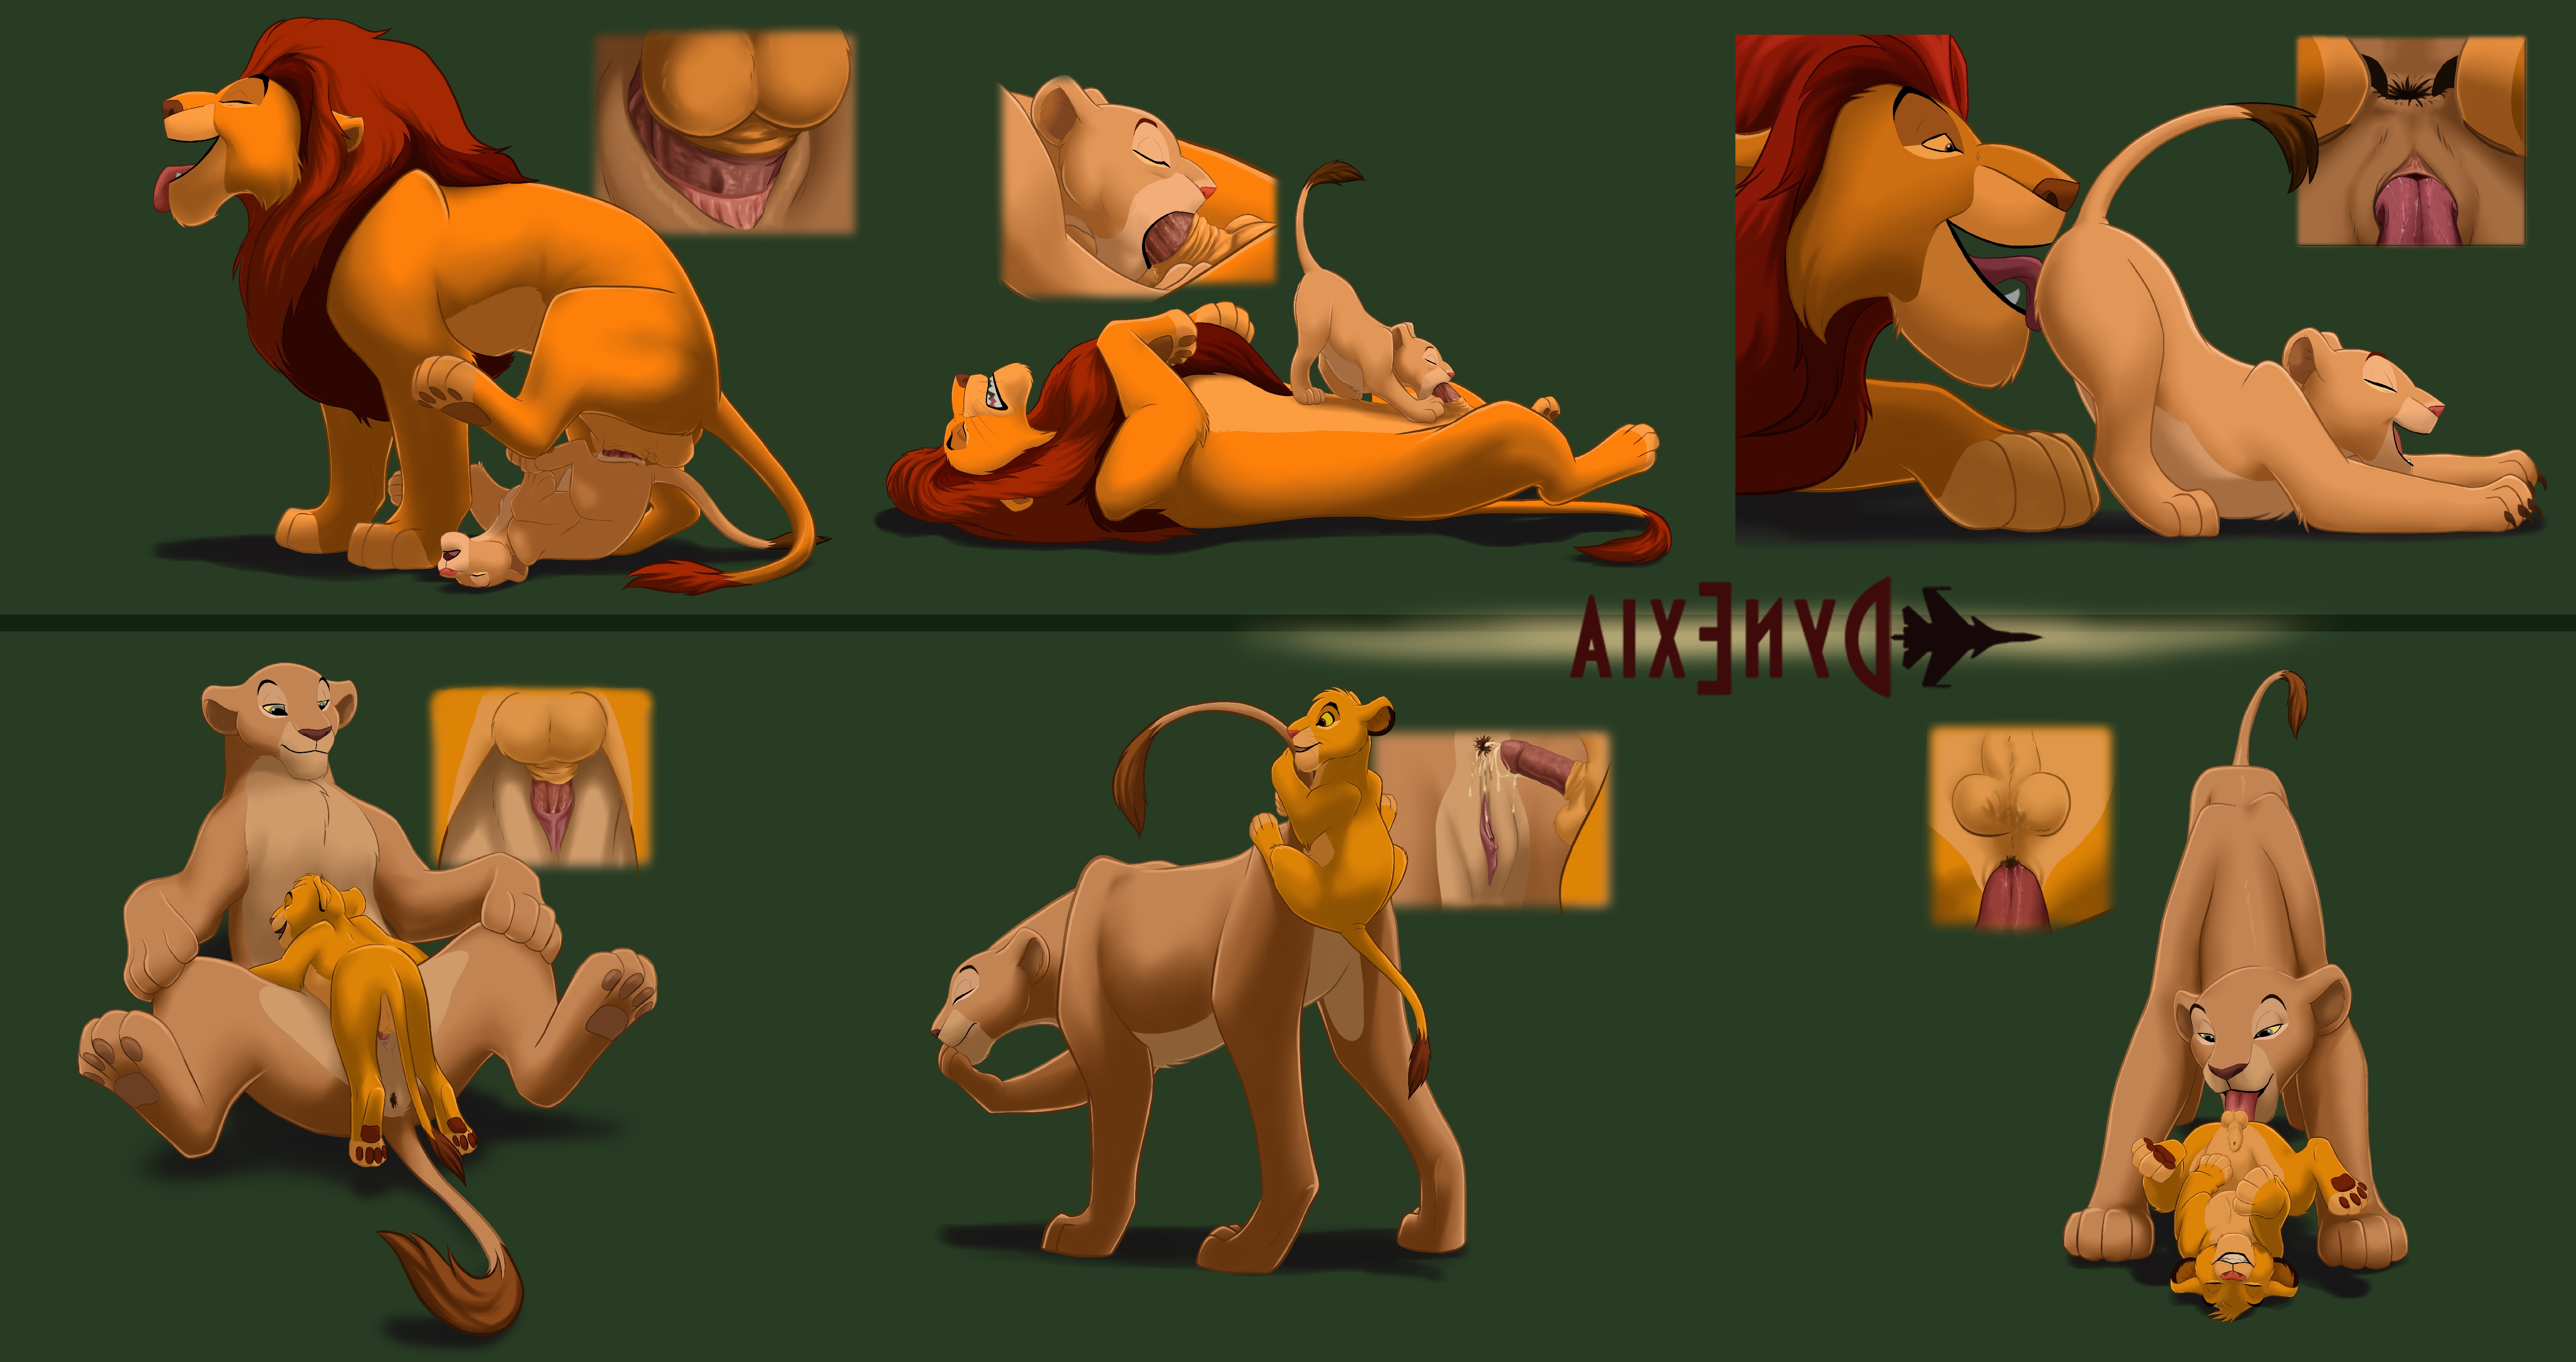 mufasa,nala,simba the lion king xxx anatomically #9351620653 correct anatom...